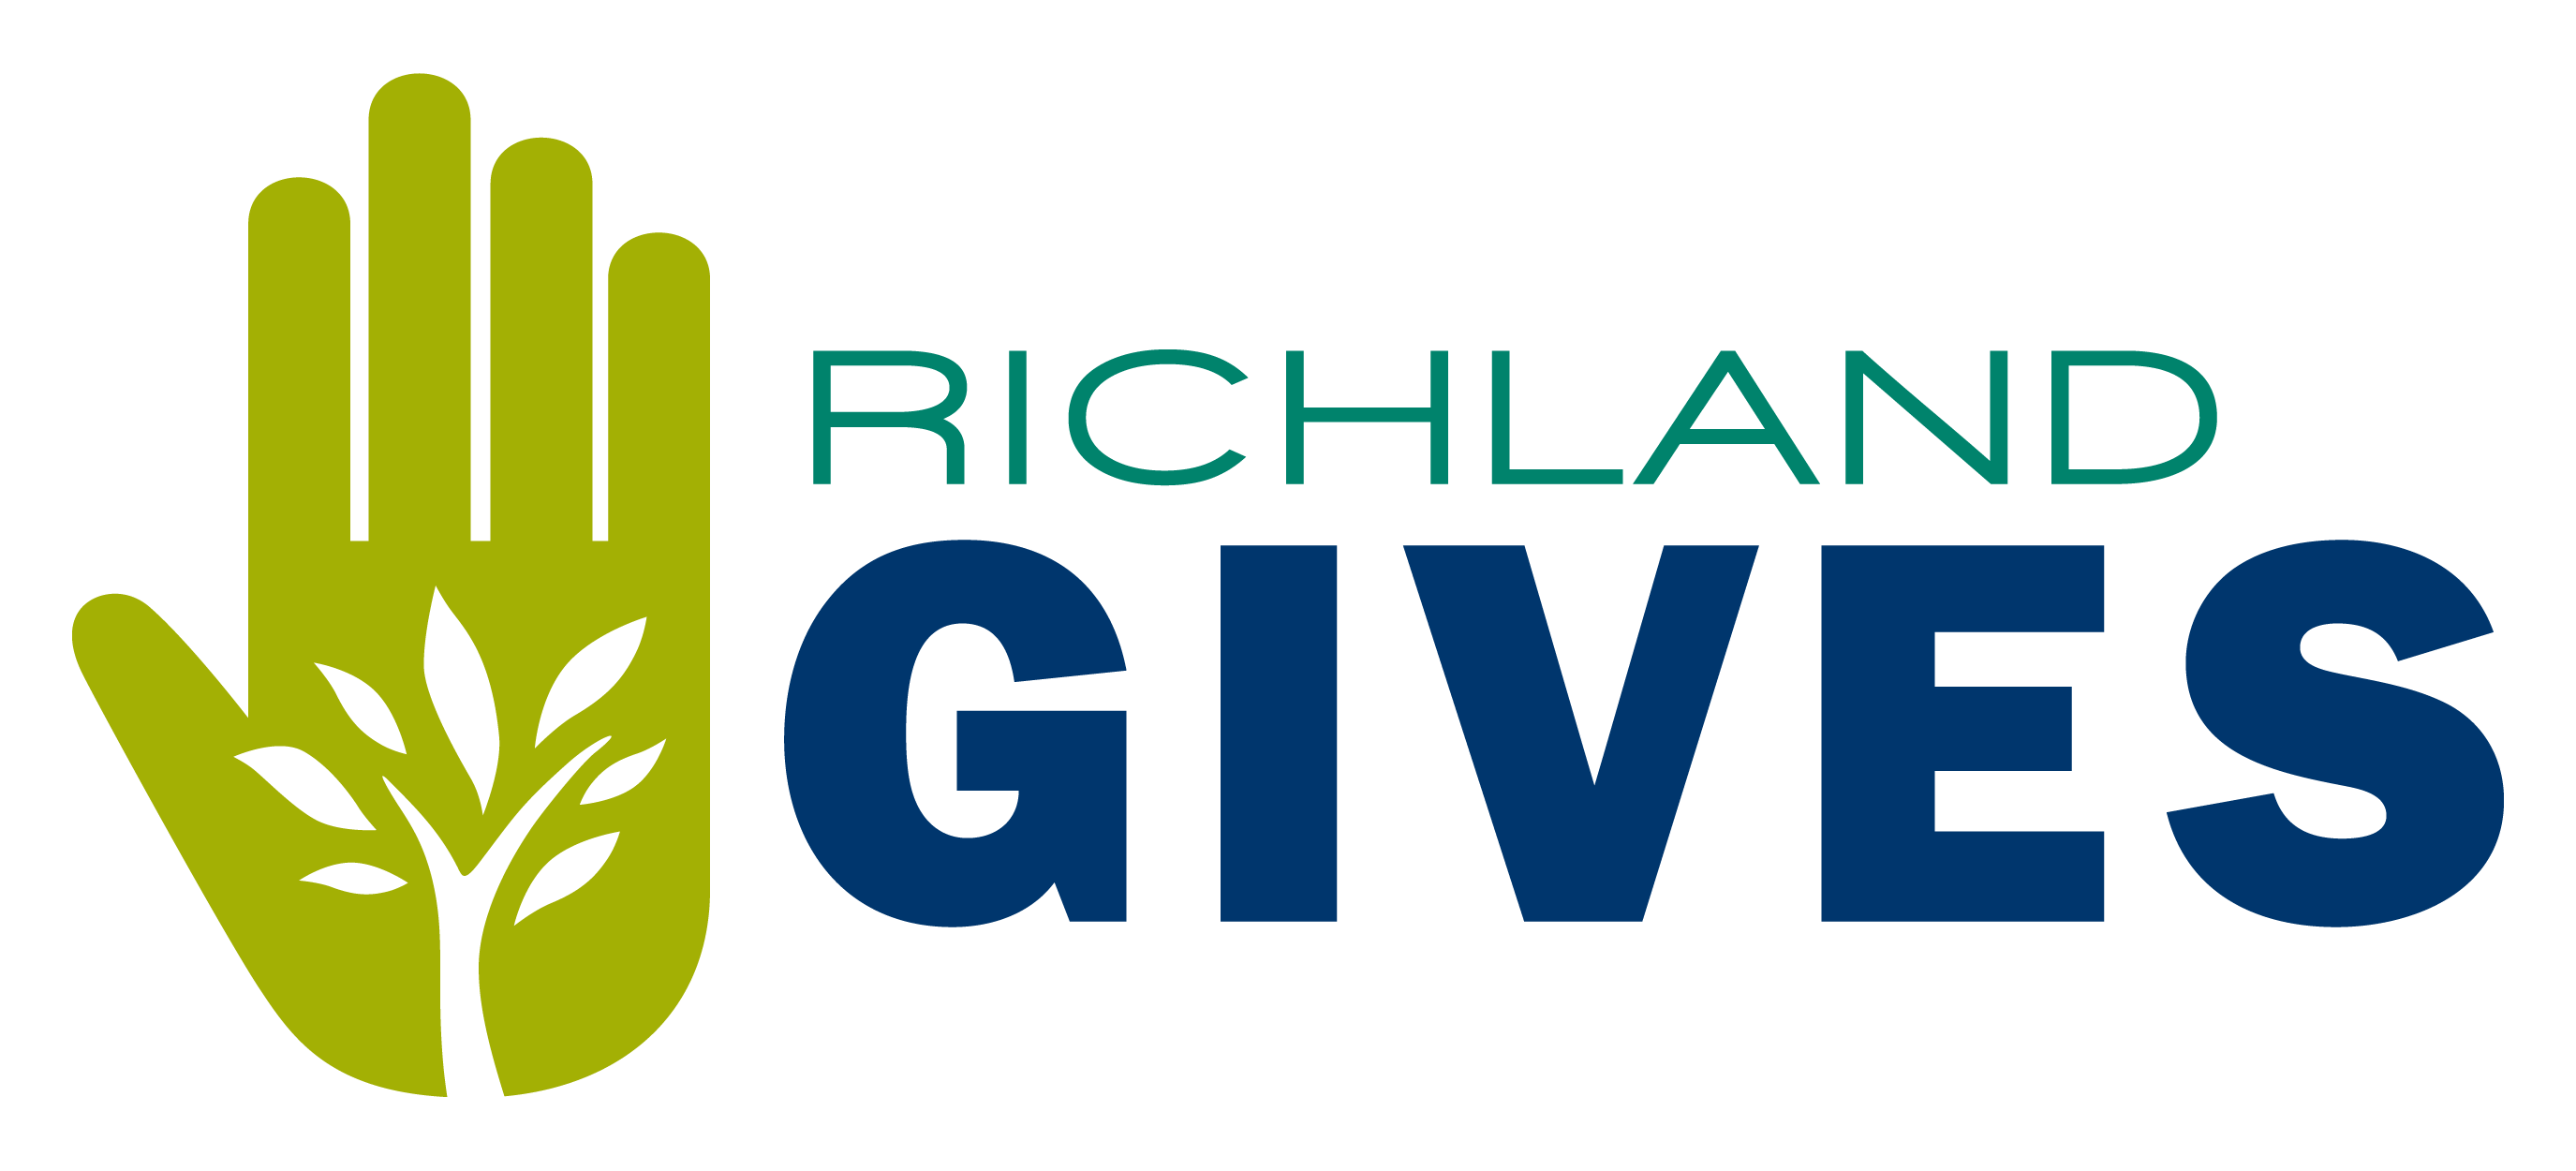 Richland Gives